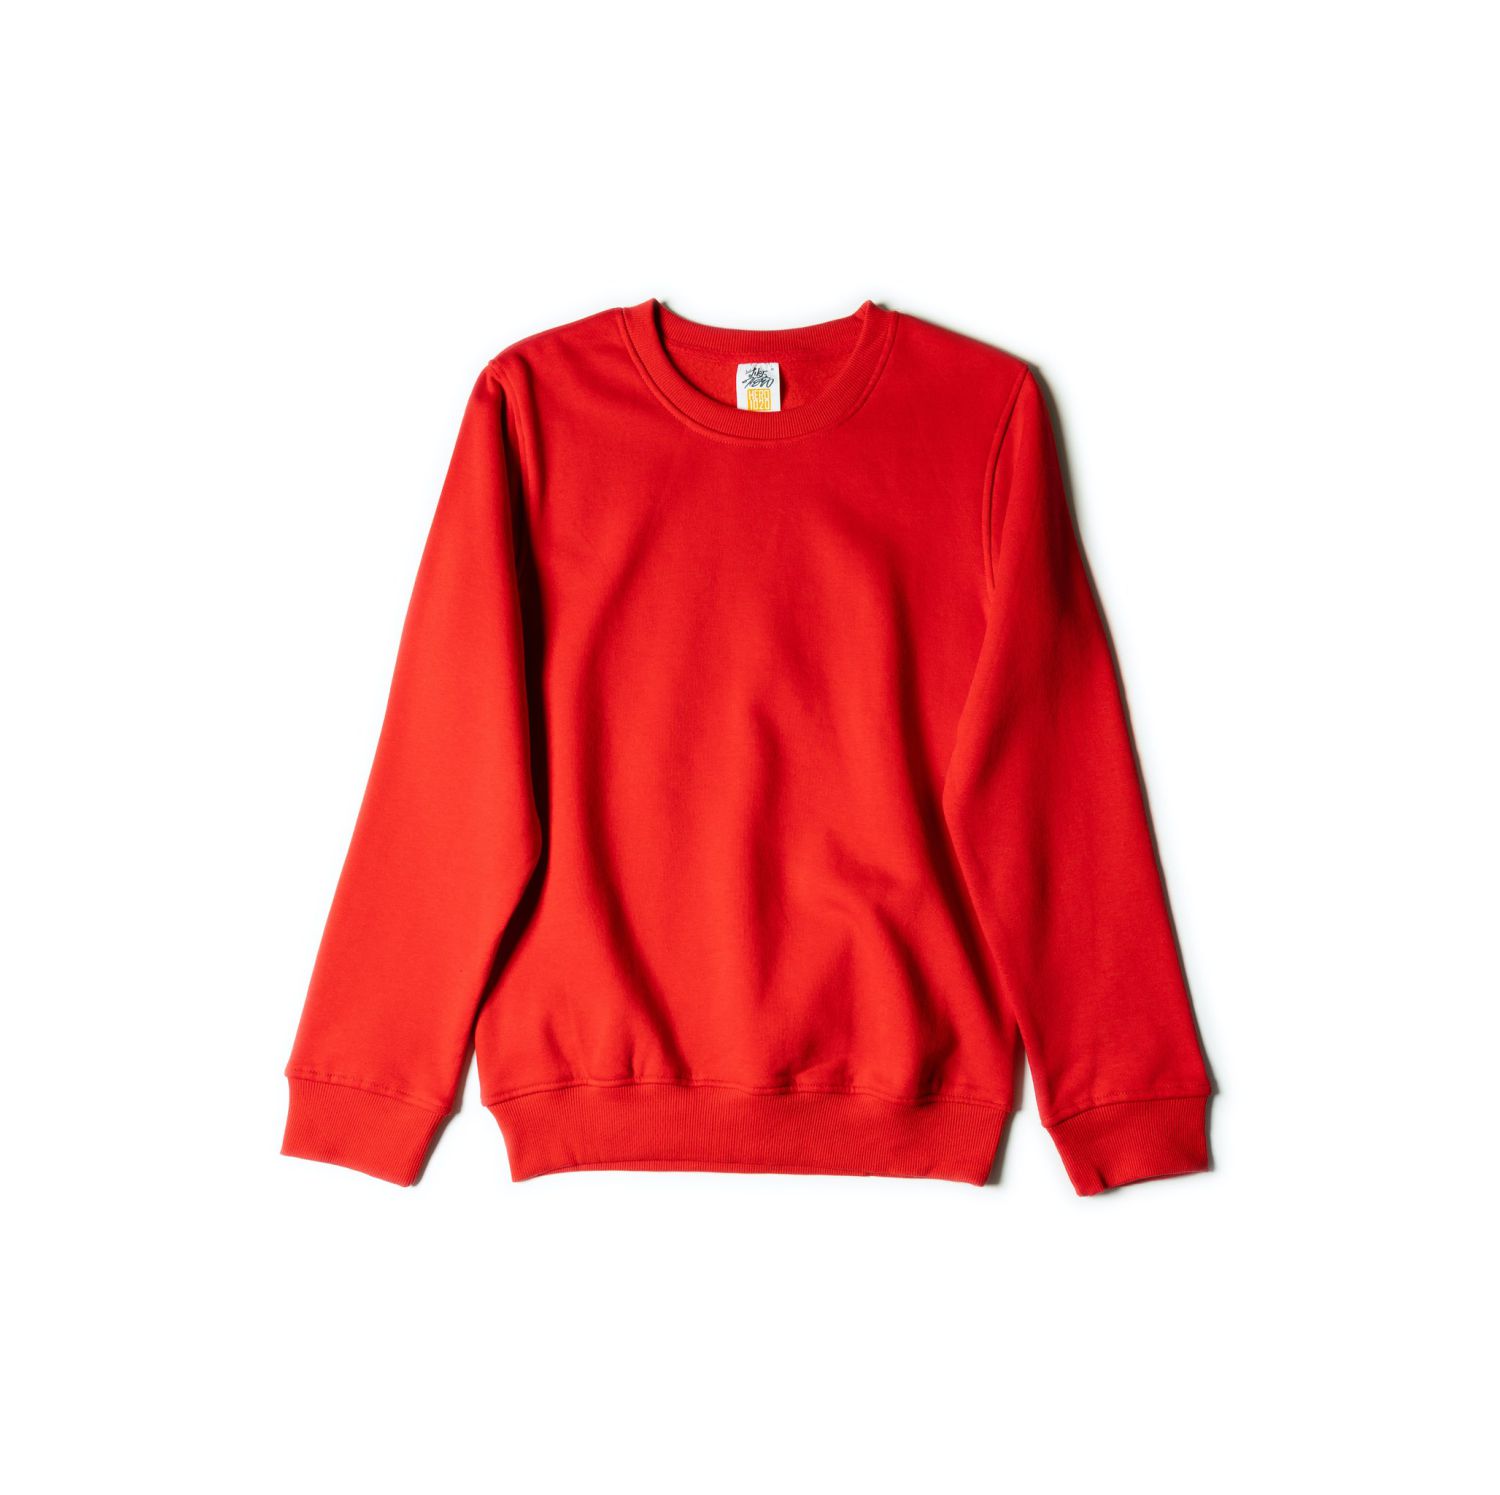 Just Like Hero Crewneck Sweatshirt #1020 Red